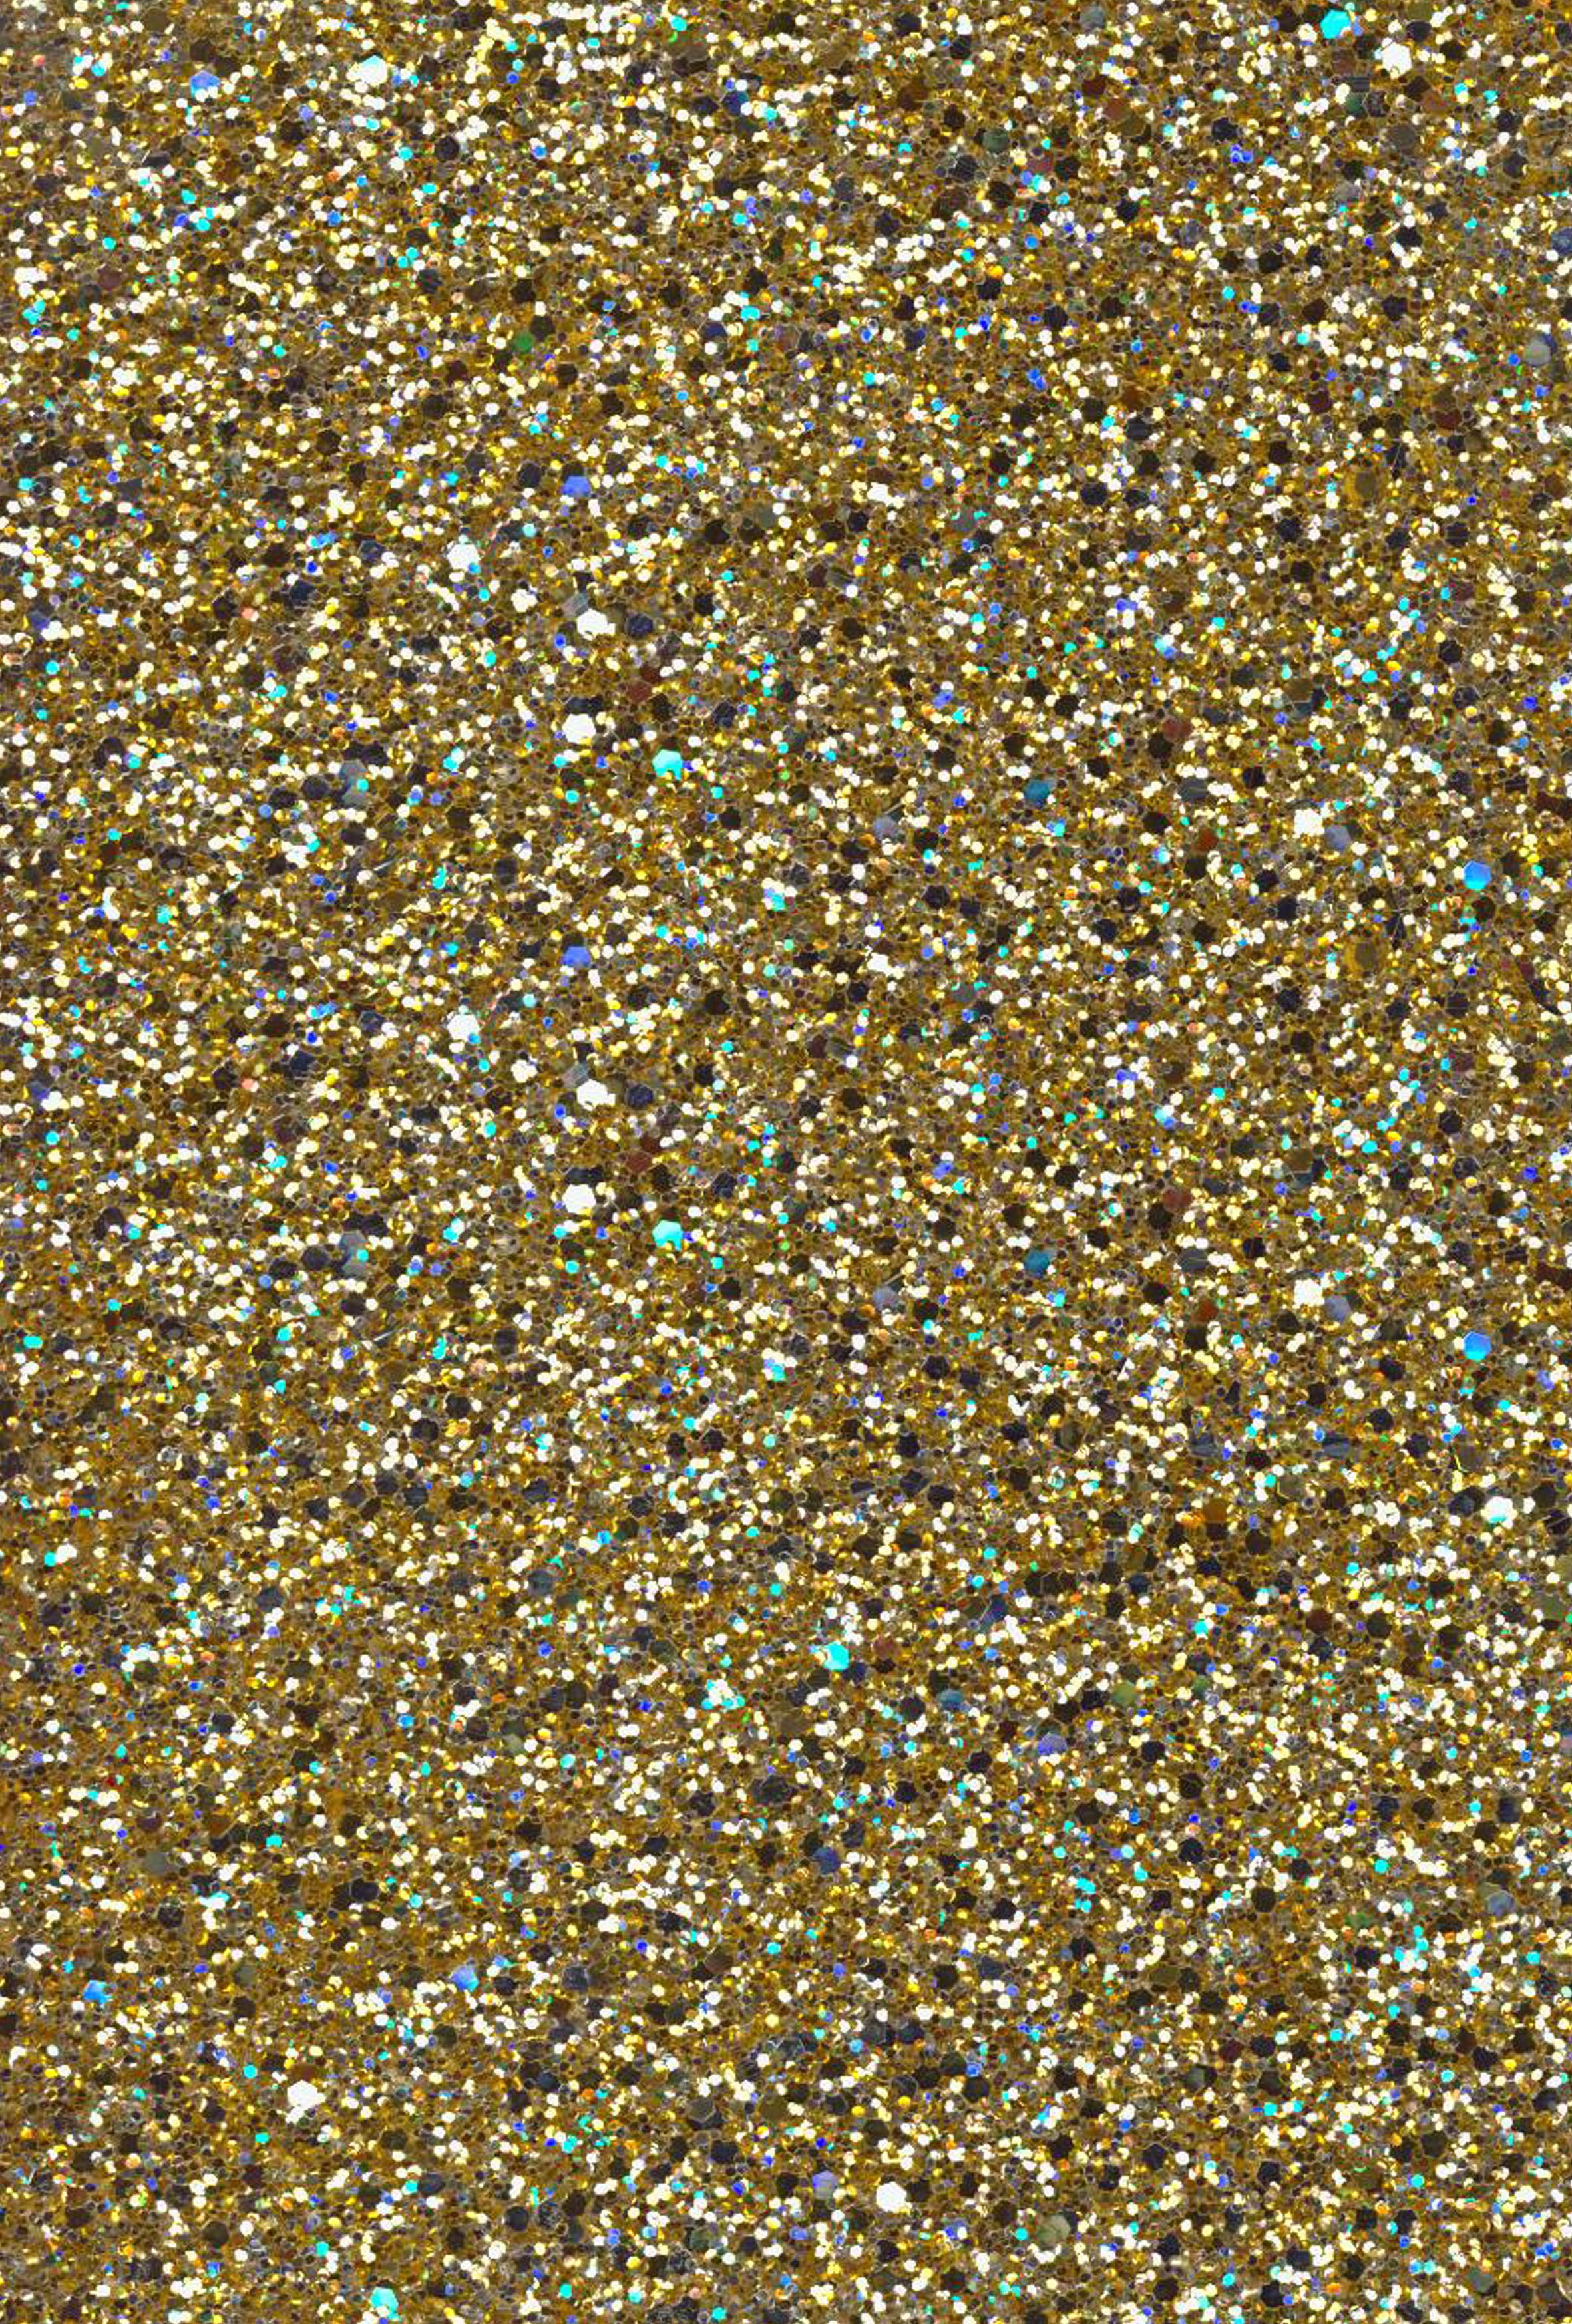 Gold Glitter Backgrounds 2362x3493